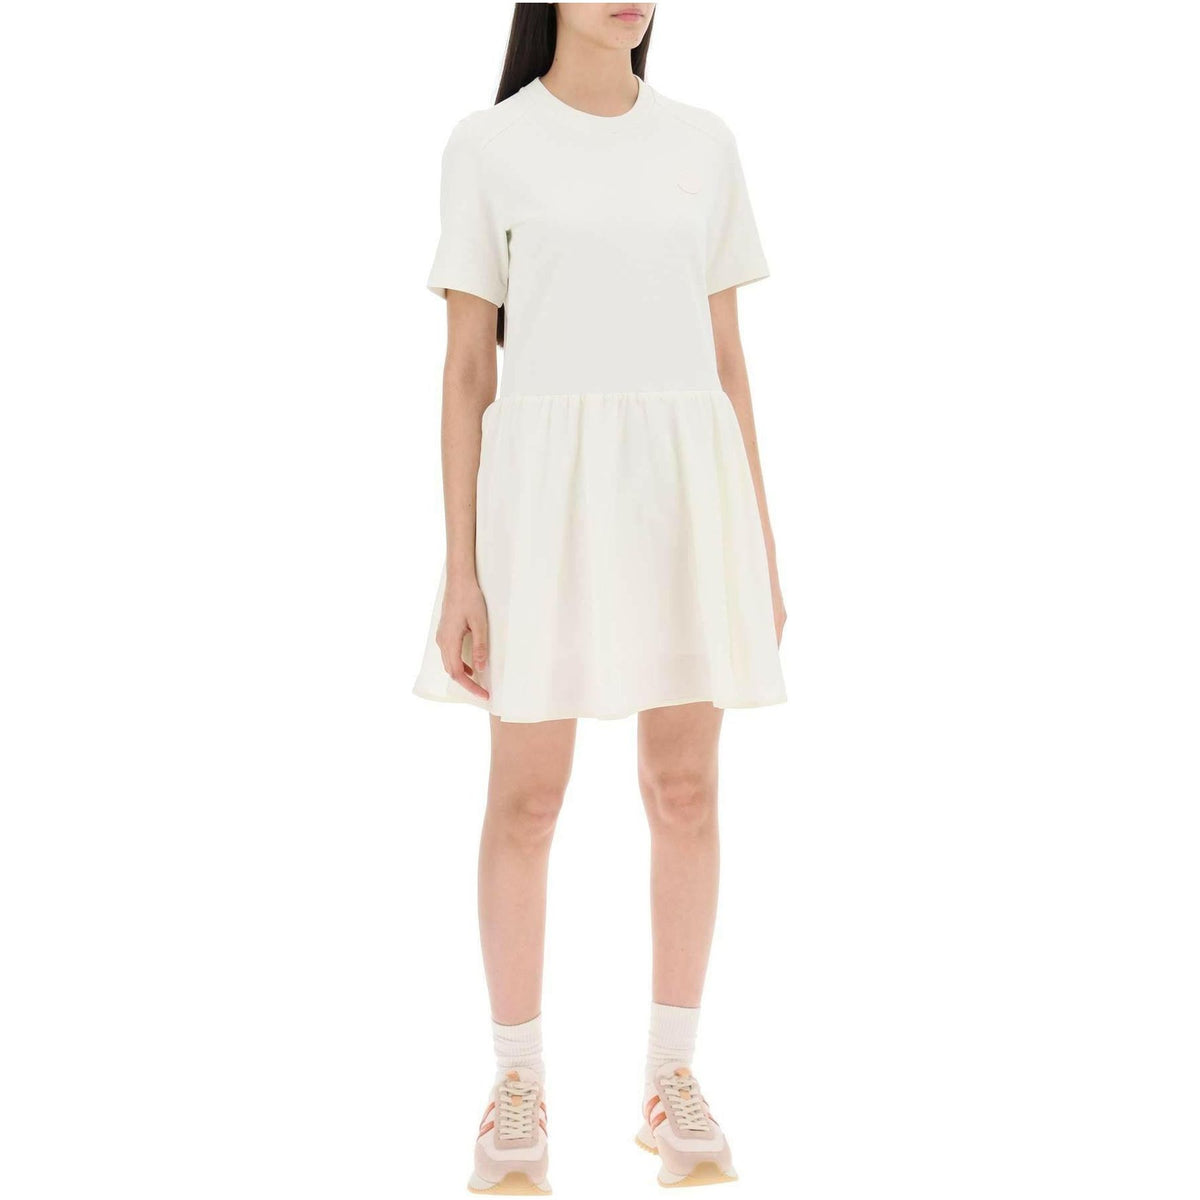 MONCLER - White Fit and Flare Mini Dress with Taffeta Details - JOHN JULIA